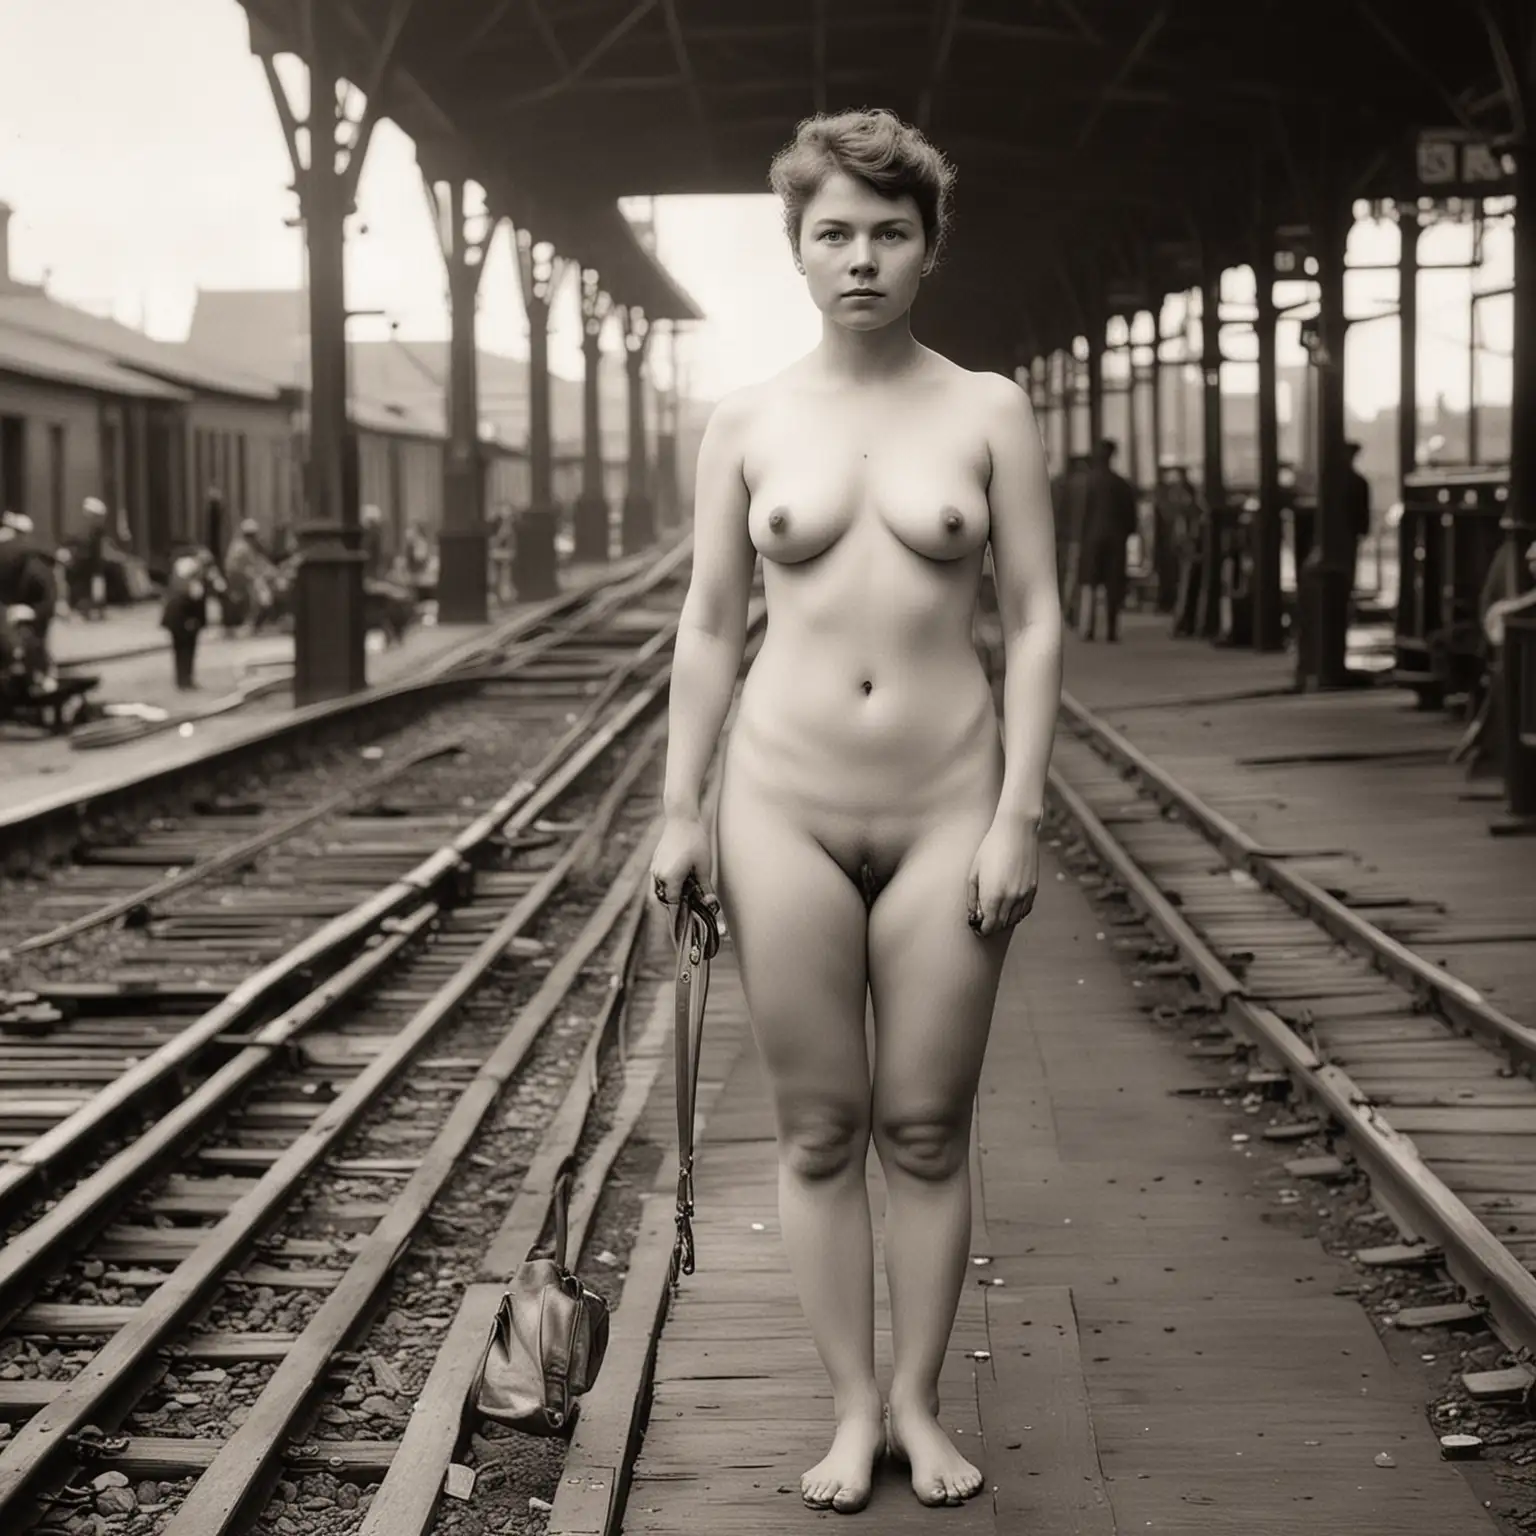 Historical Woman at Train Station 1890